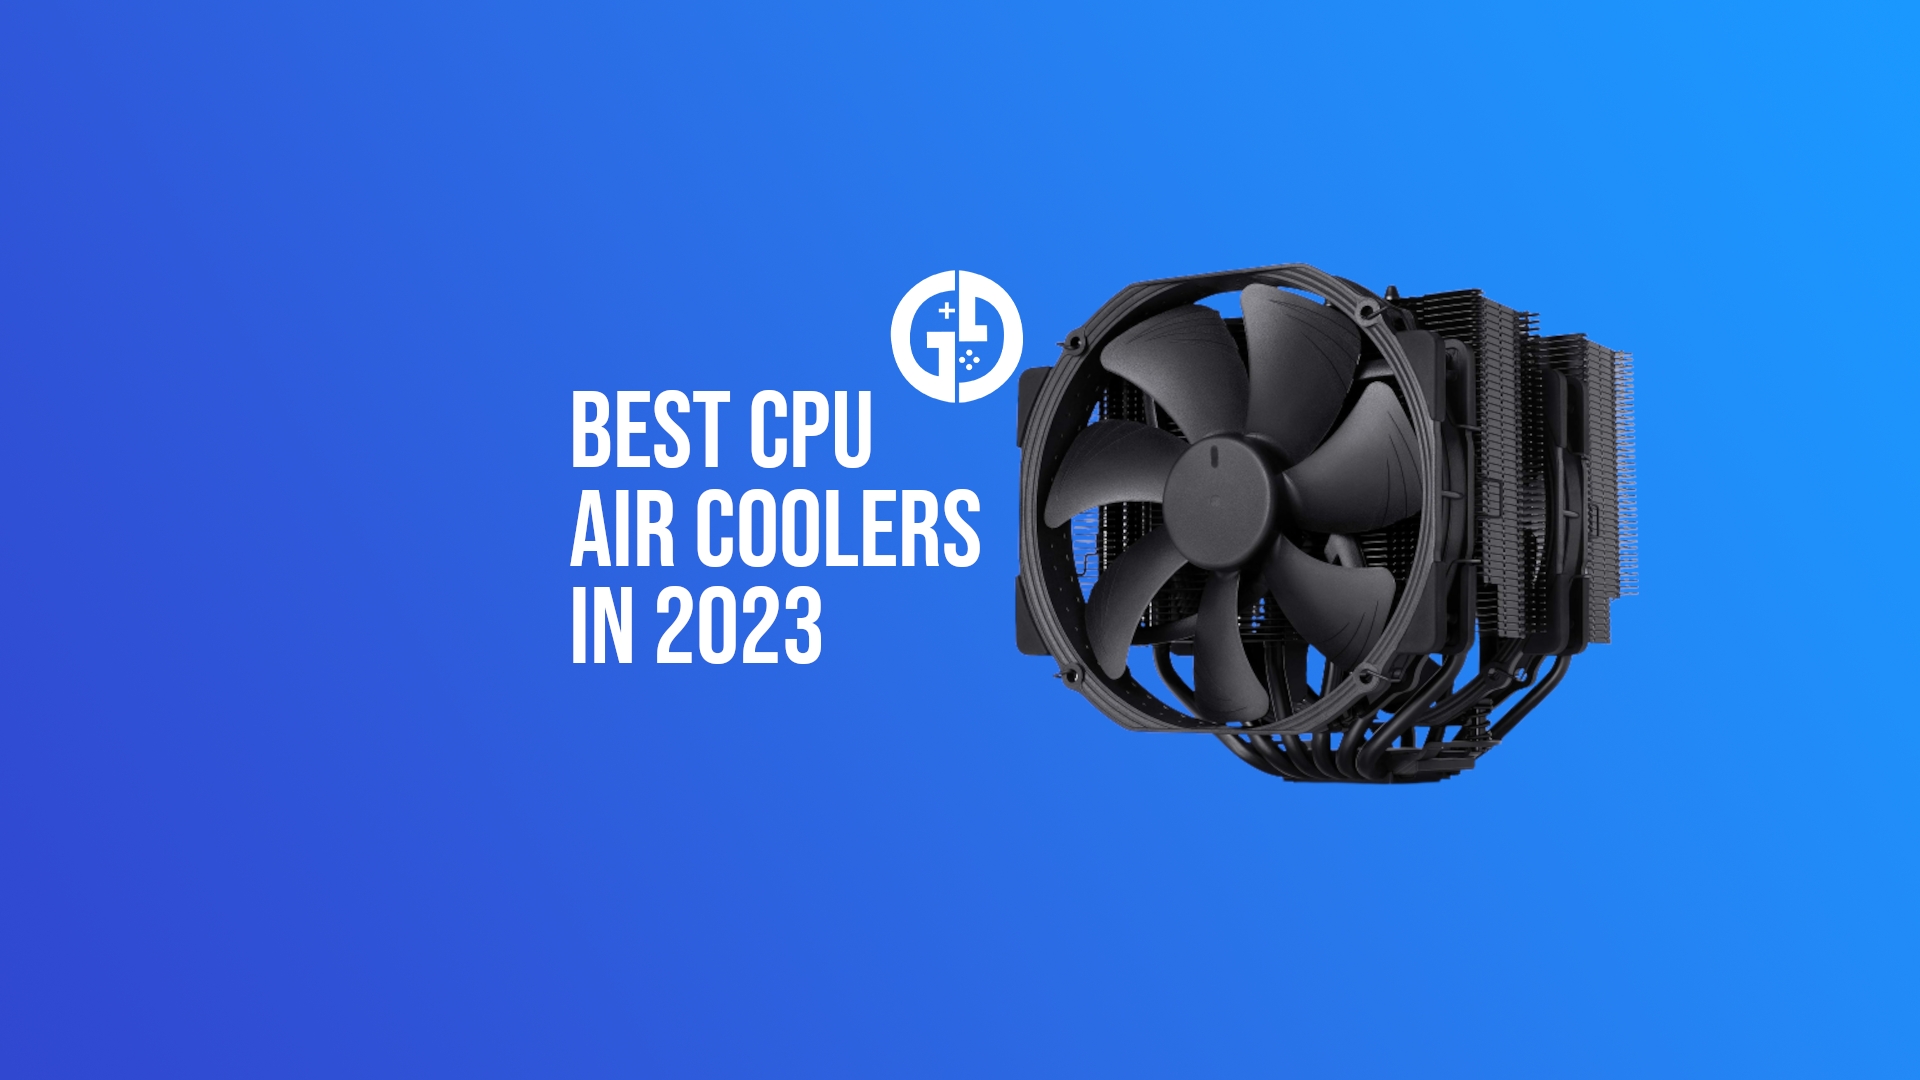 https://www.ggrecon.com/media/2abbf1rc/best-cpu-air-coolers.jpg